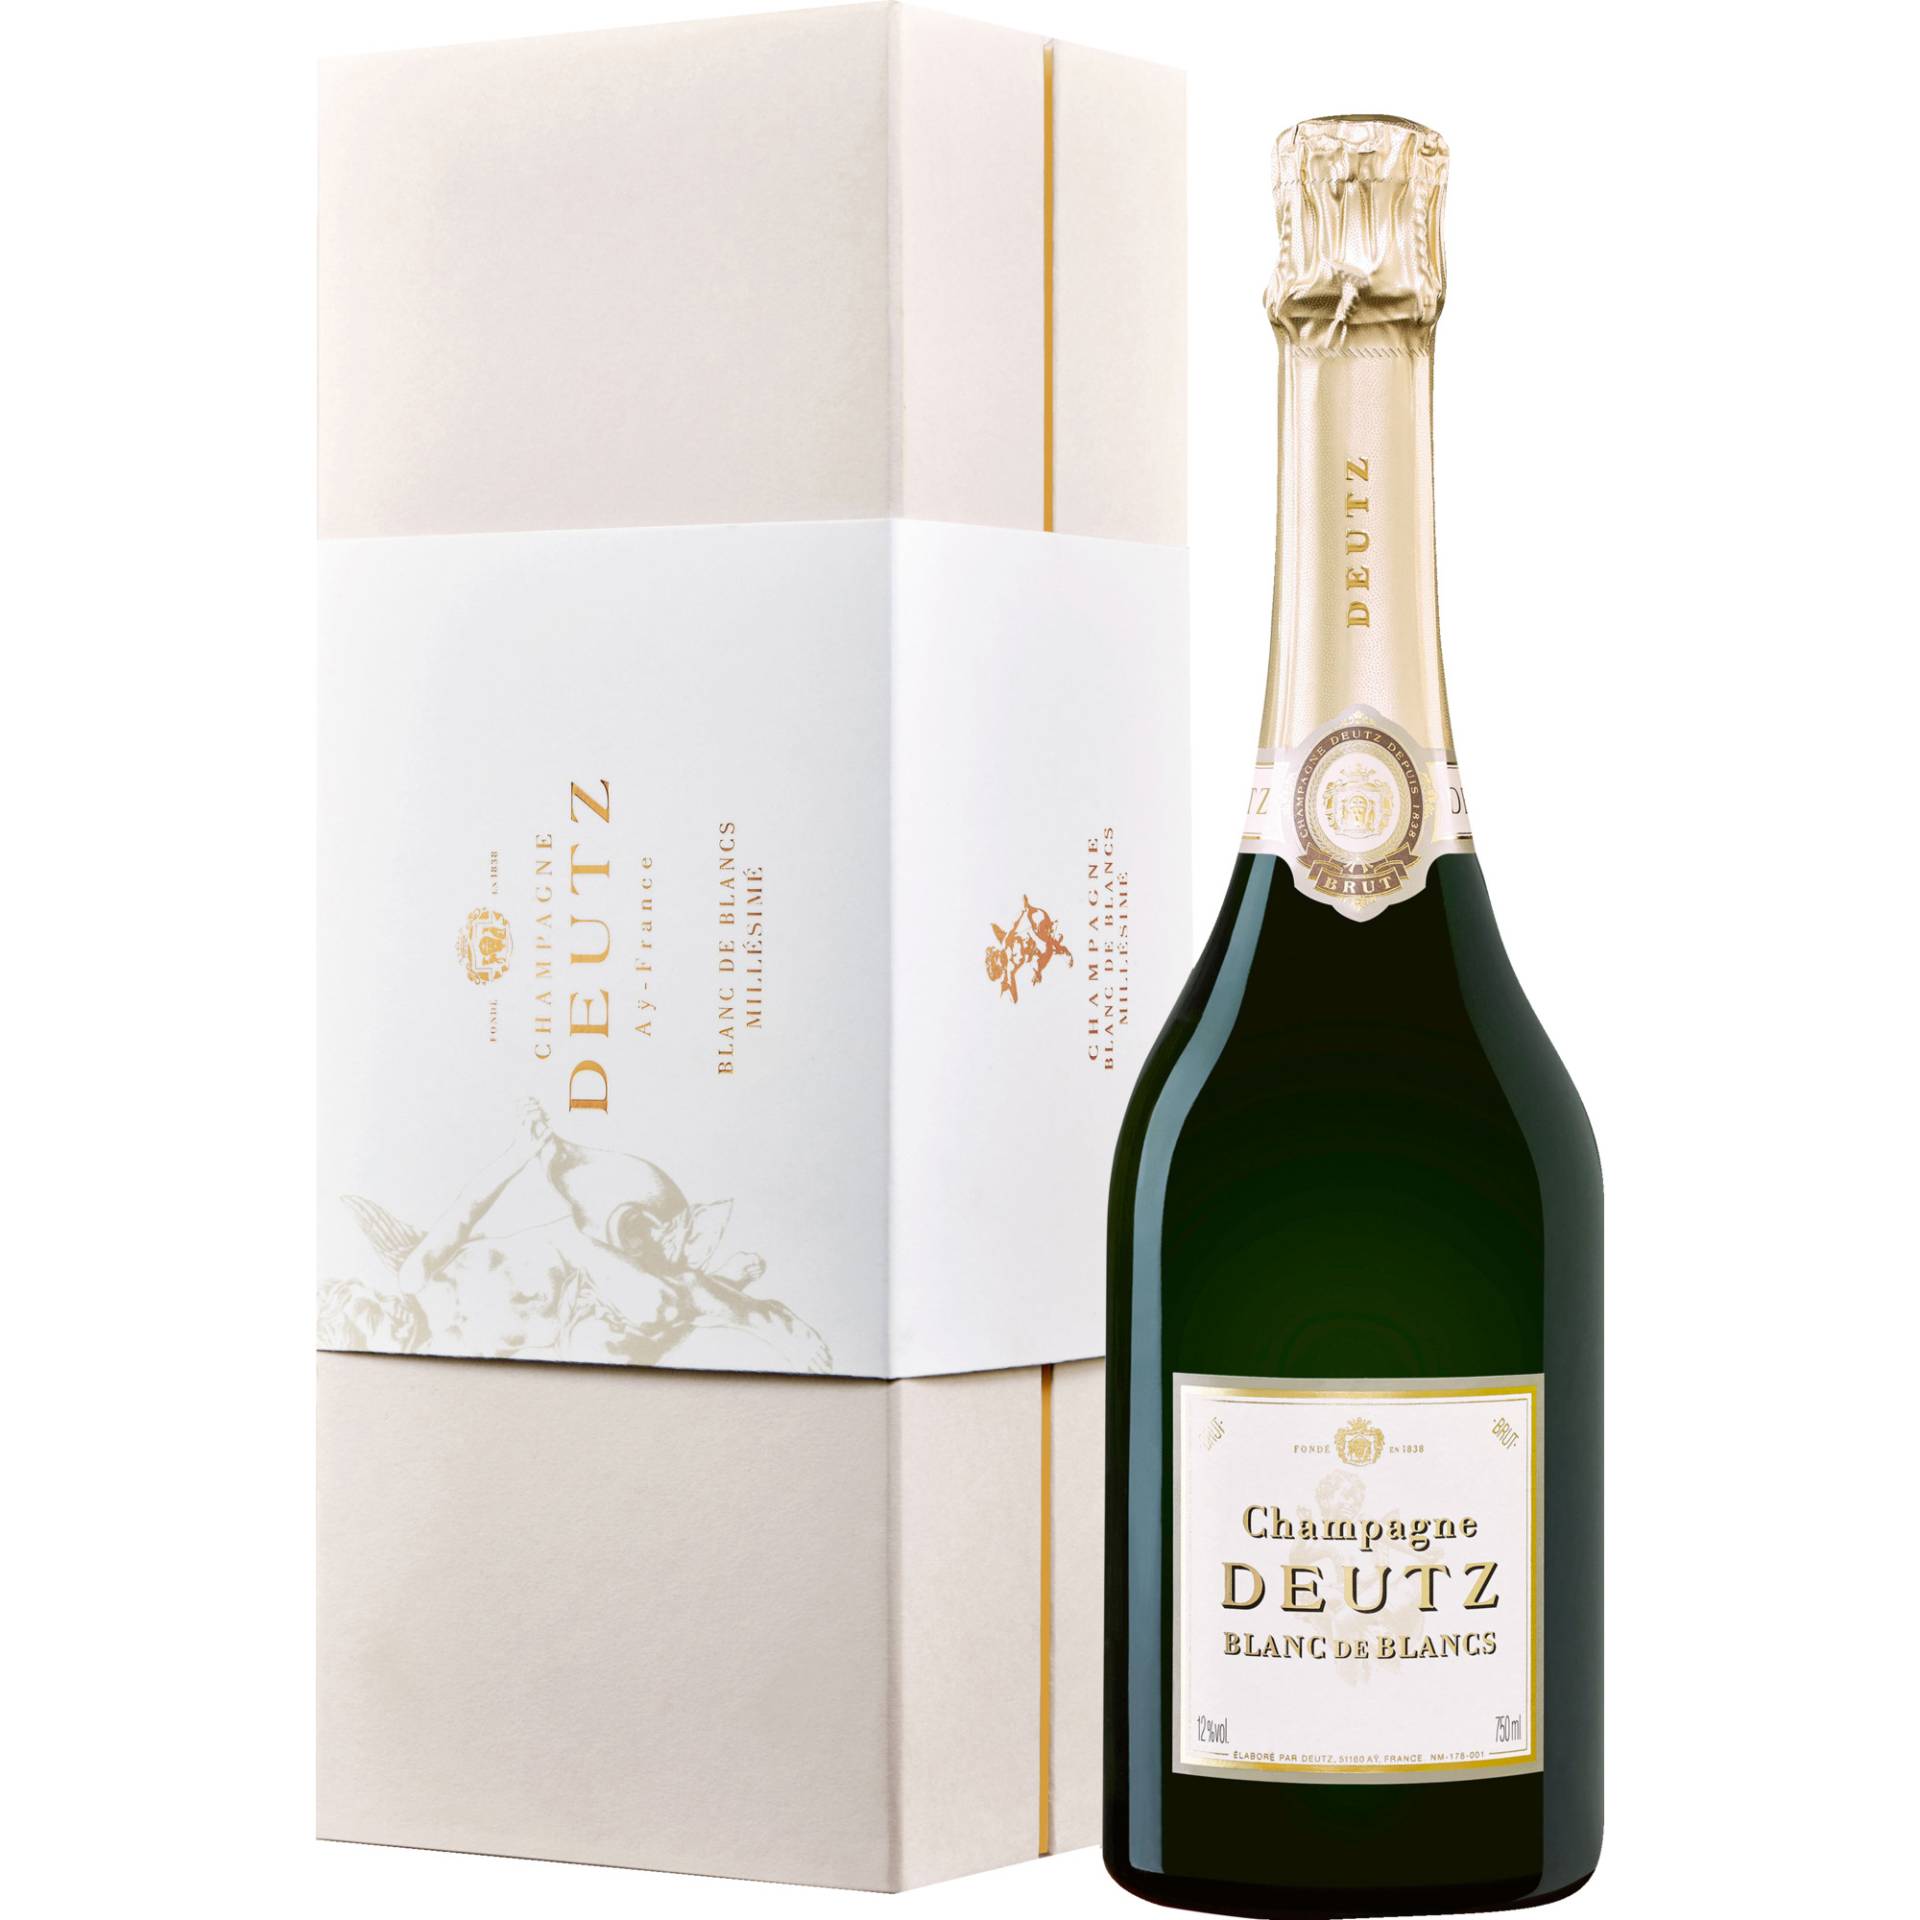 Champagne Deutz Blanc de Blancs, Brut, Blanc de Blancs, Champagne AC, Geschenketui, Champagne, 2018, Schaumwein von Champagne Deutz, Ay, France